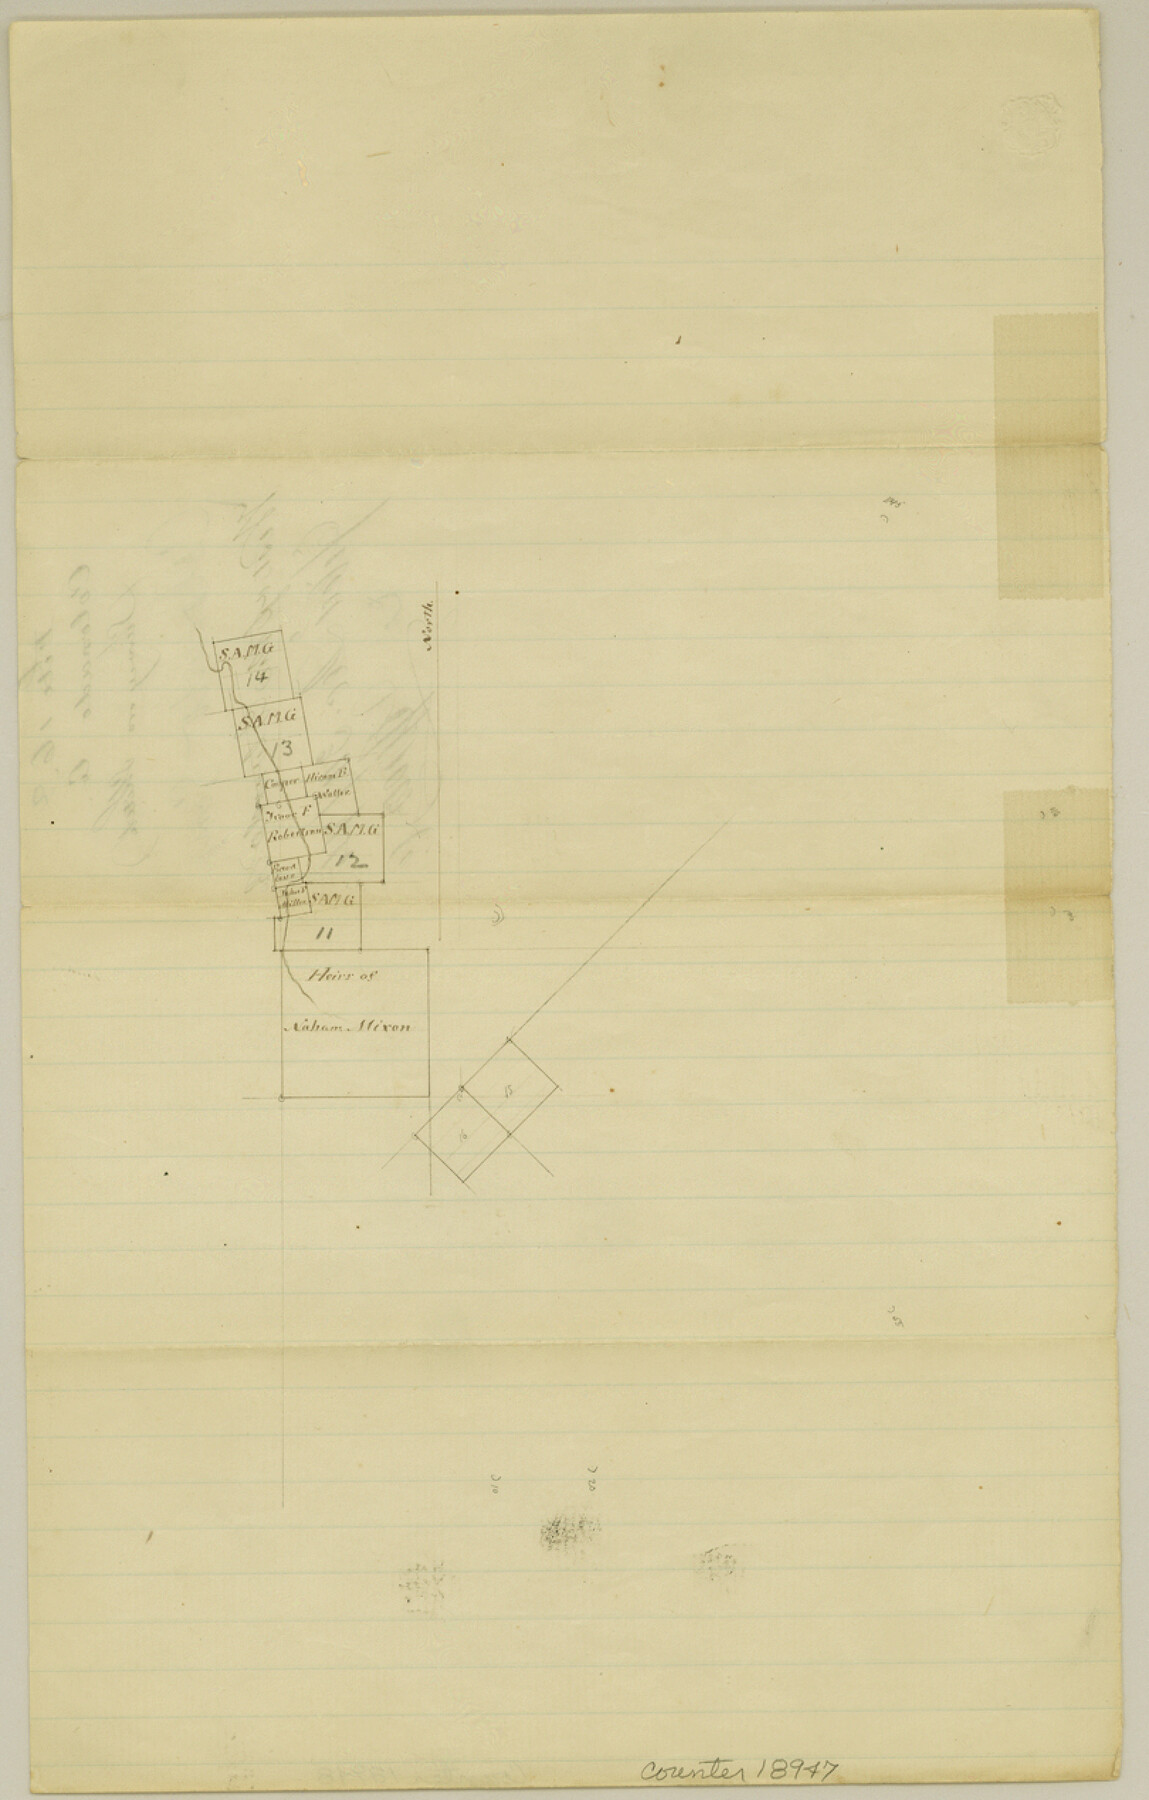 18947, Colorado County Sketch File 16a, General Map Collection